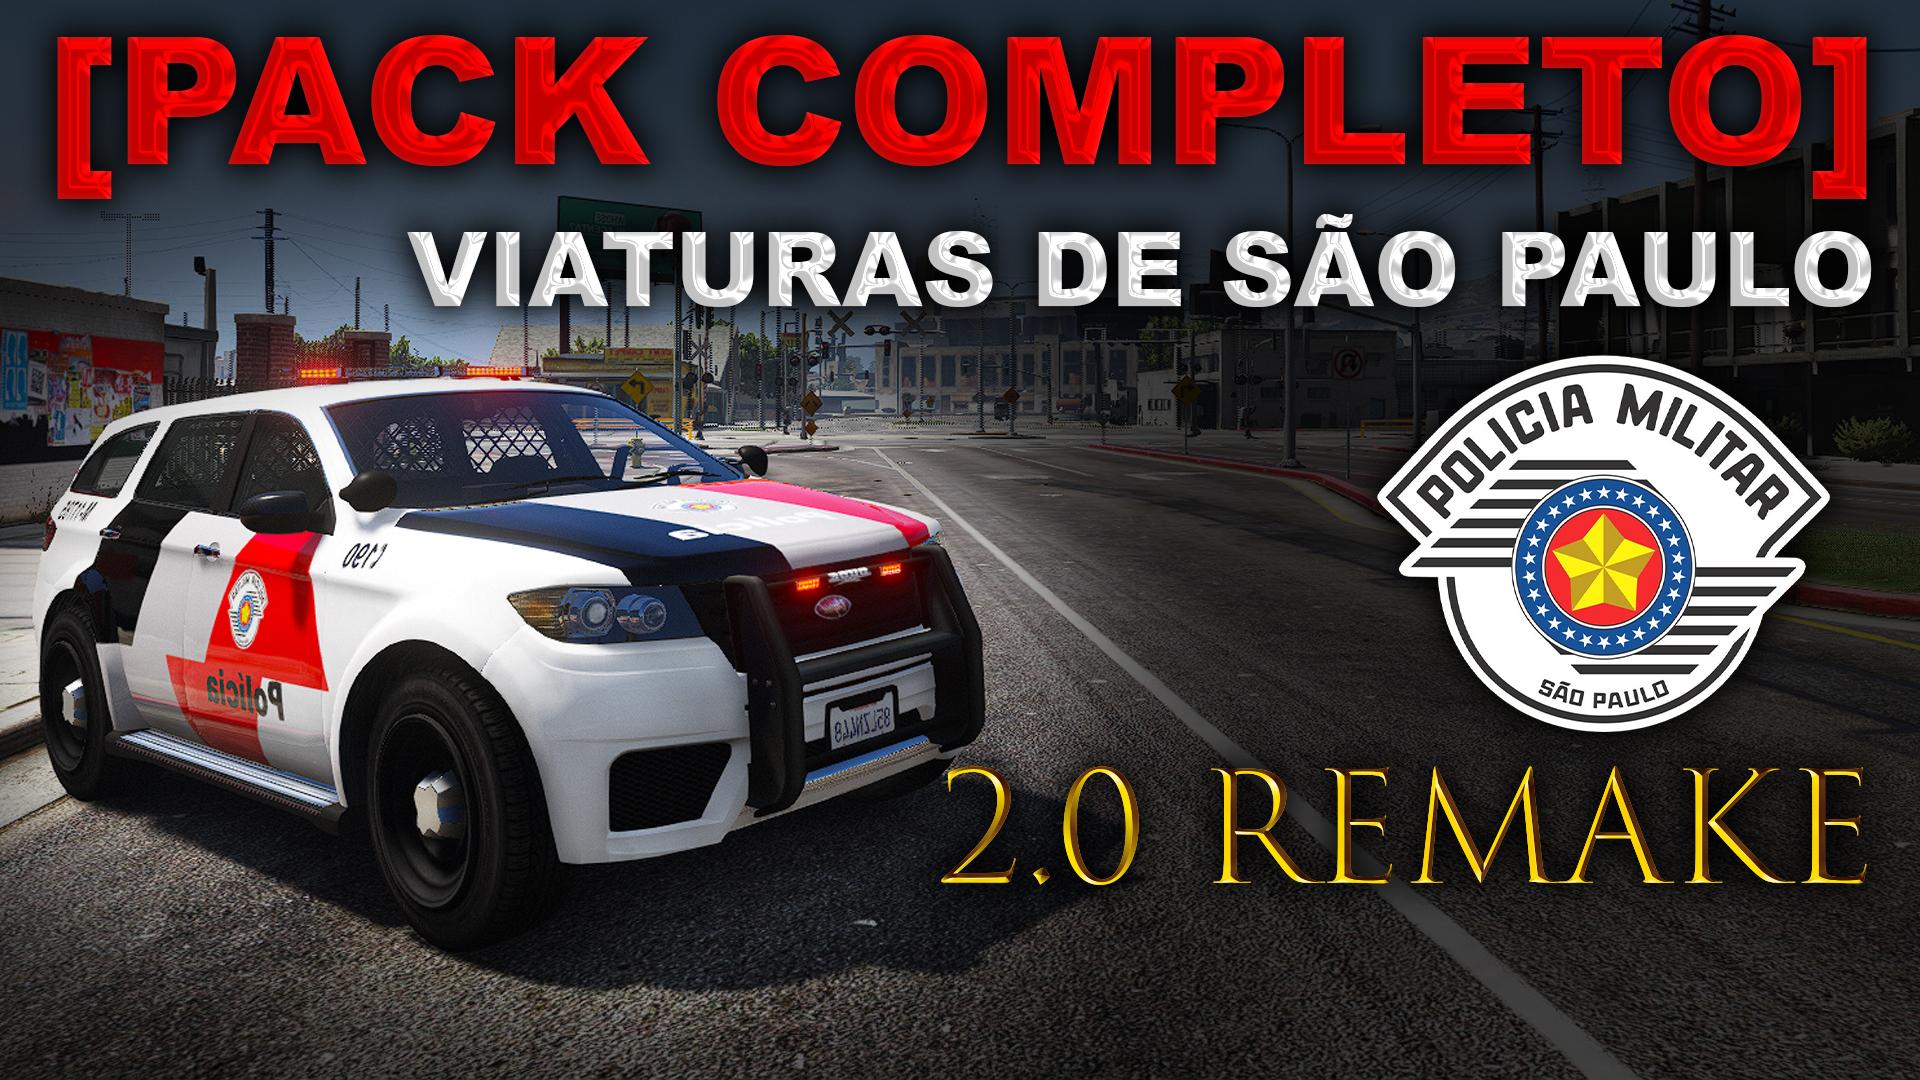 Pack Completo Viaturas São Paulo - PMESP, Rodoviária, PF, GOE, Policia  Ambiental, SAMU, Bombeiros (.OIV) 1.0 »  - FS19, FS17, ETS 2  mods